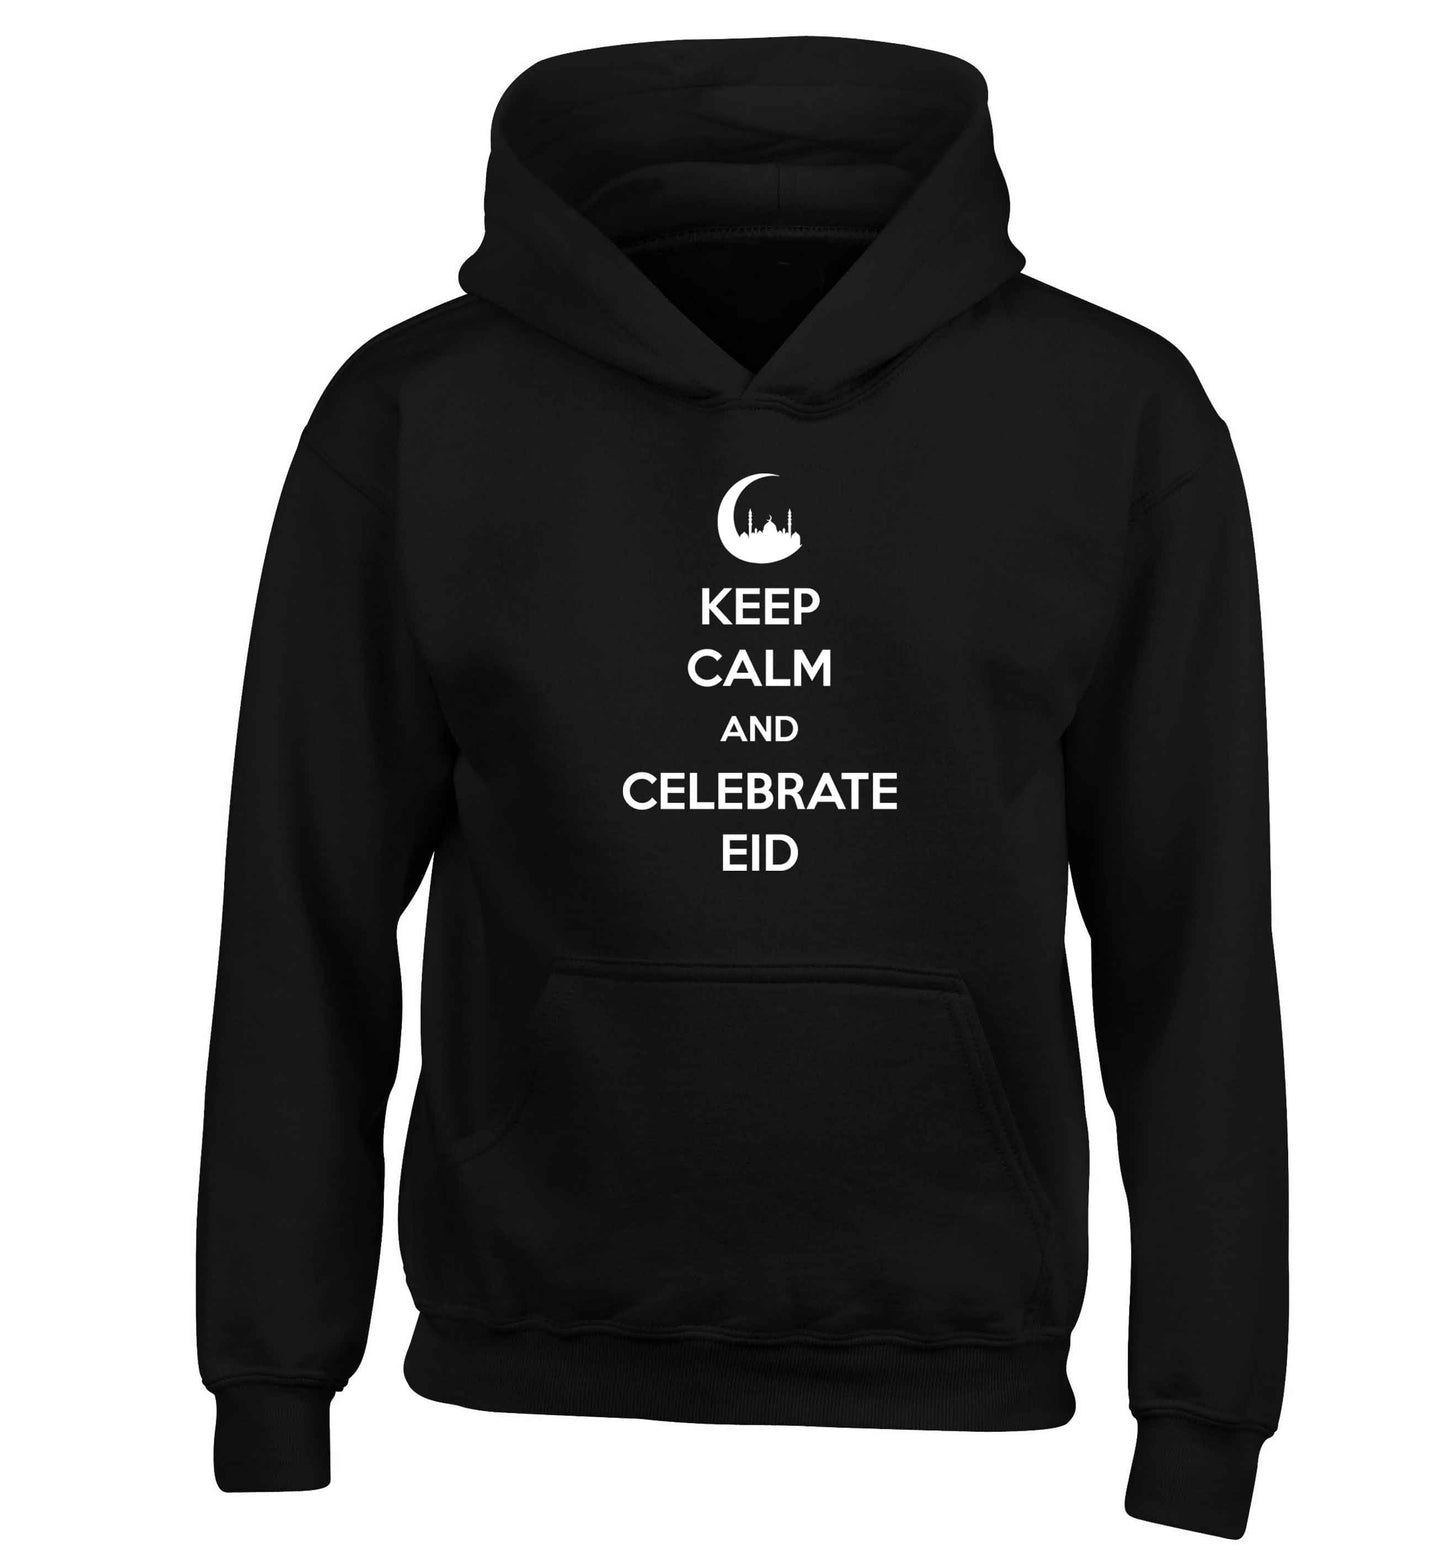 Keep calm and celebrate Eid children's black hoodie 12-13 Years